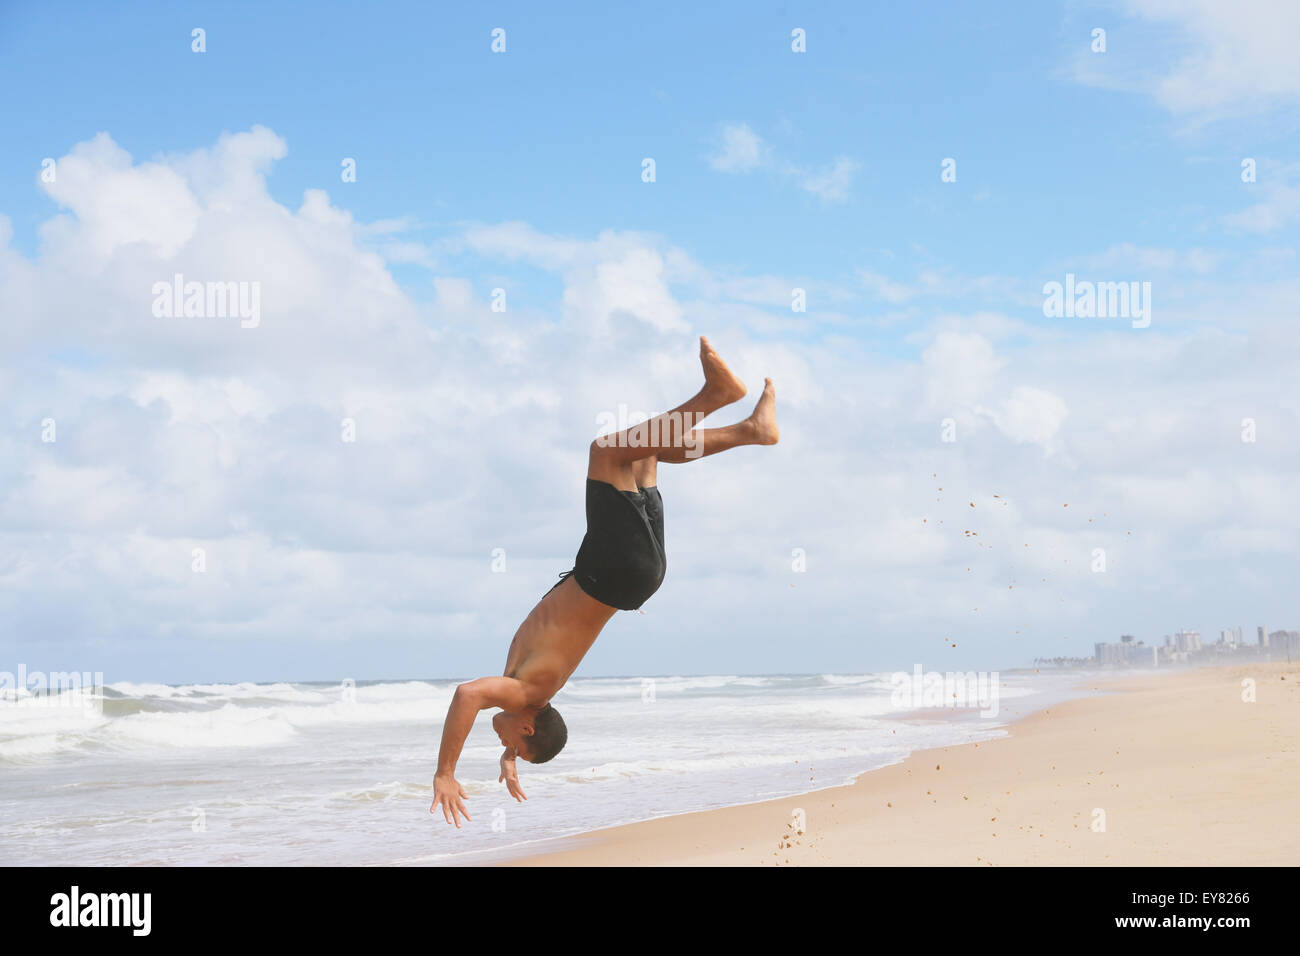 Man jumping on the beach, Salvador, Brazil Stock Photo